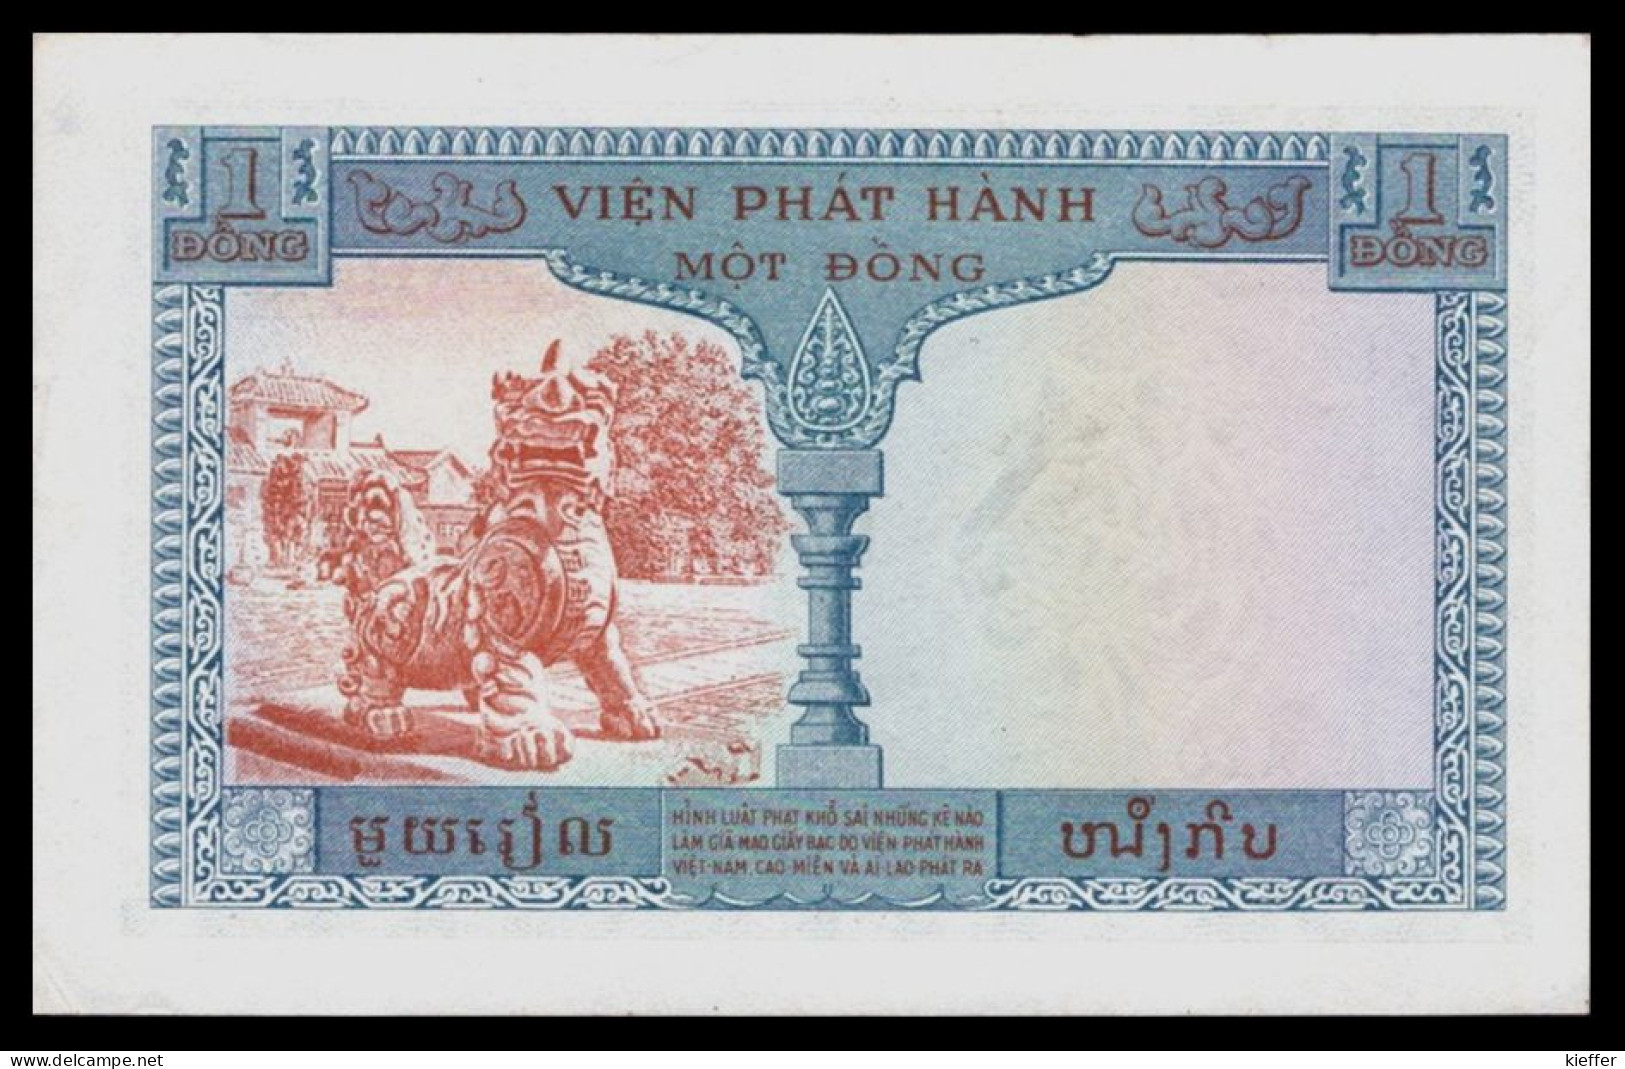 INDOCHINE - VIETNAM - Etats CAMBODGE LAOS VIETNAM - 1 Piastre - 1954 - P 105 - A20 - SPL - Indochine